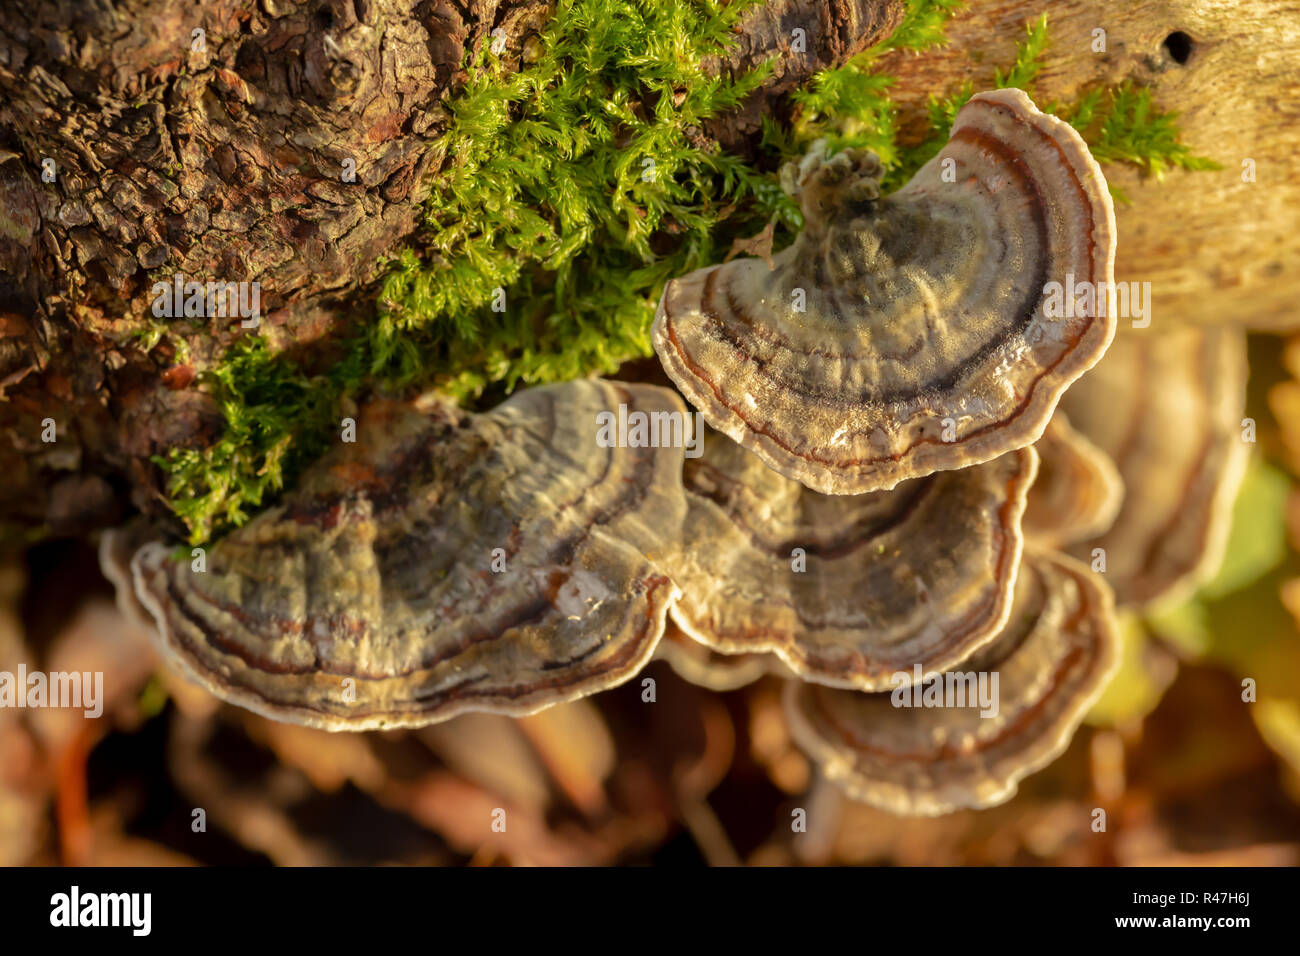 Macro photograph of a clump of Many-zoned bracket fungi. Stock Photo